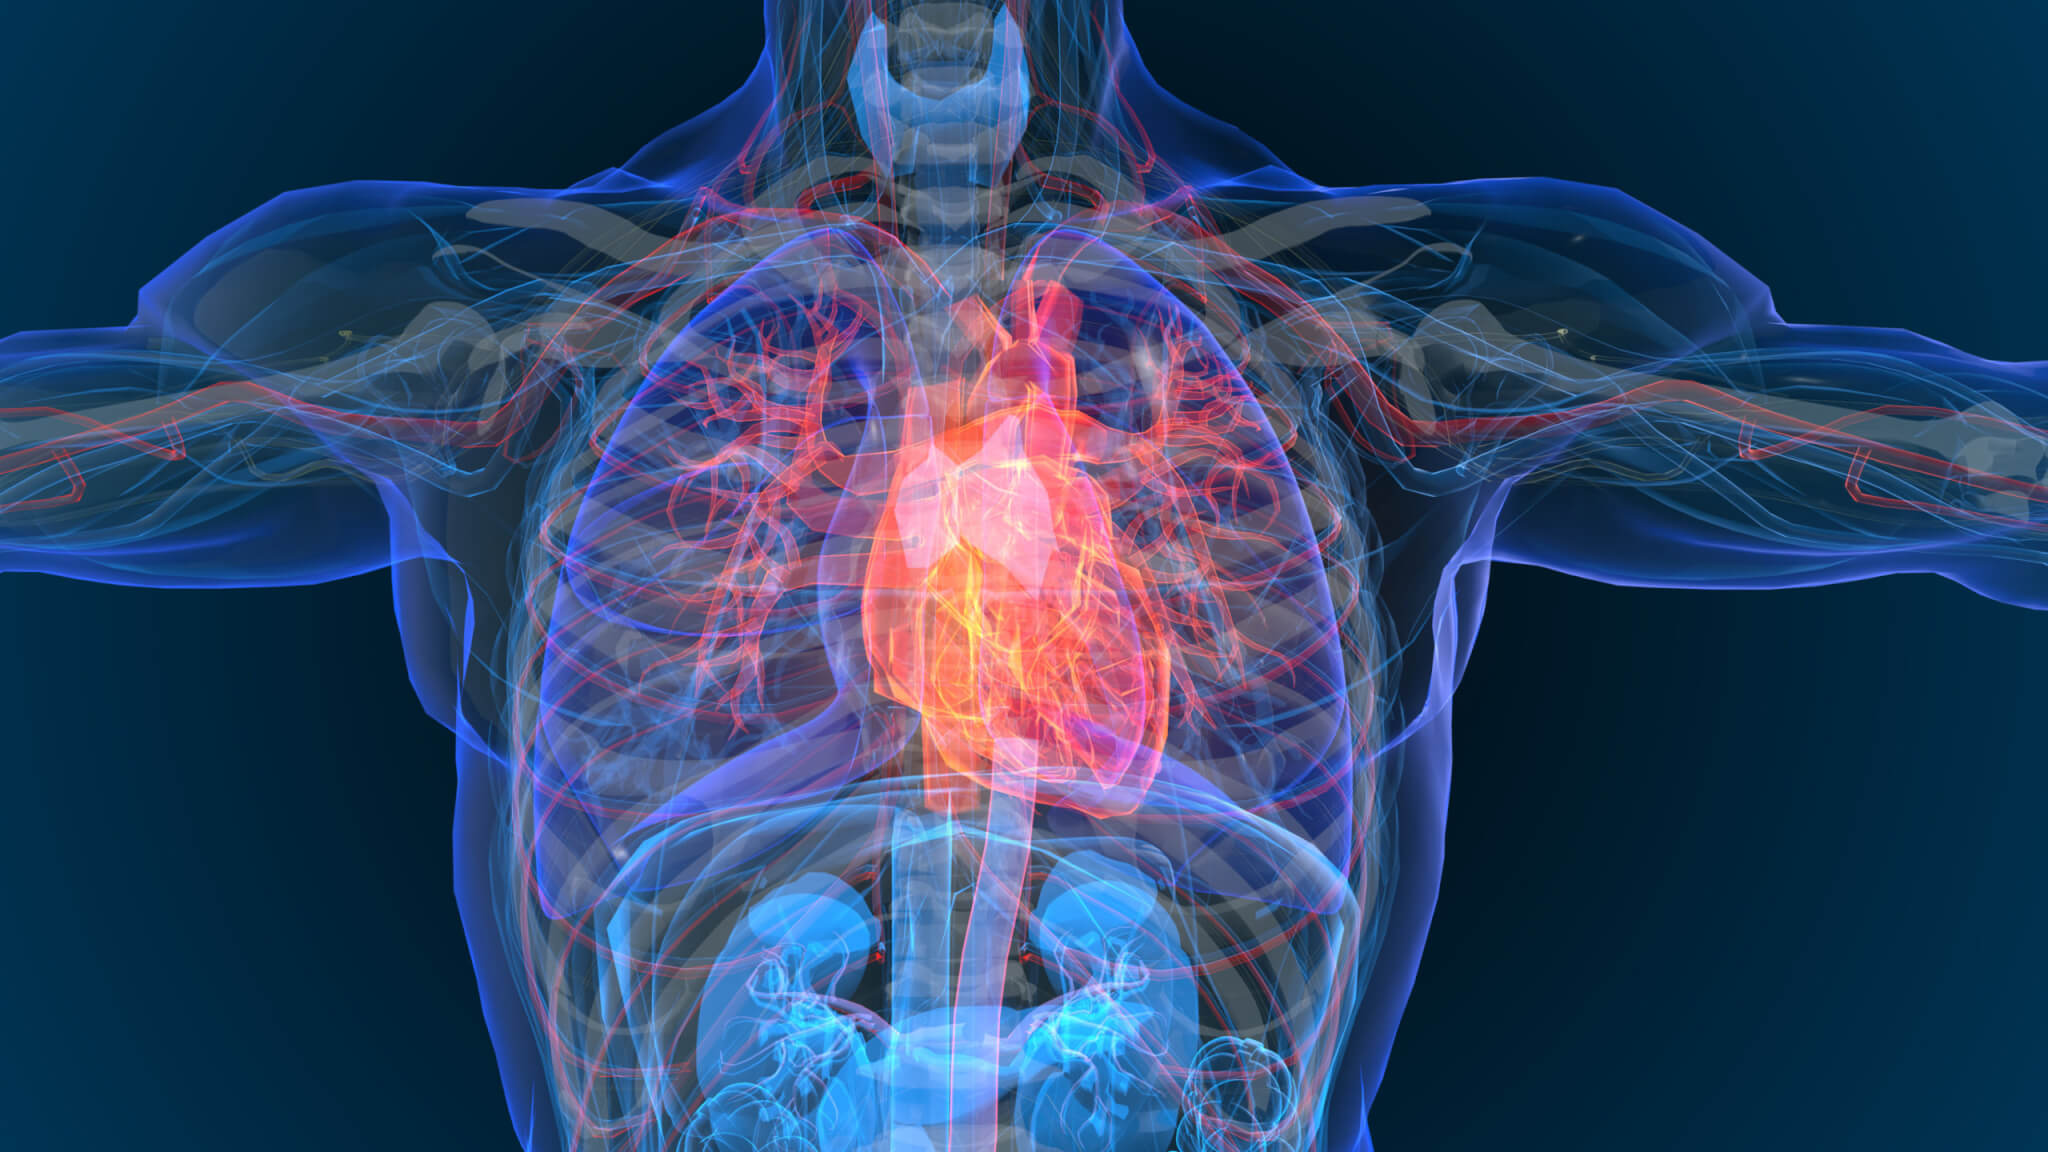 Illustration of heart inside human body